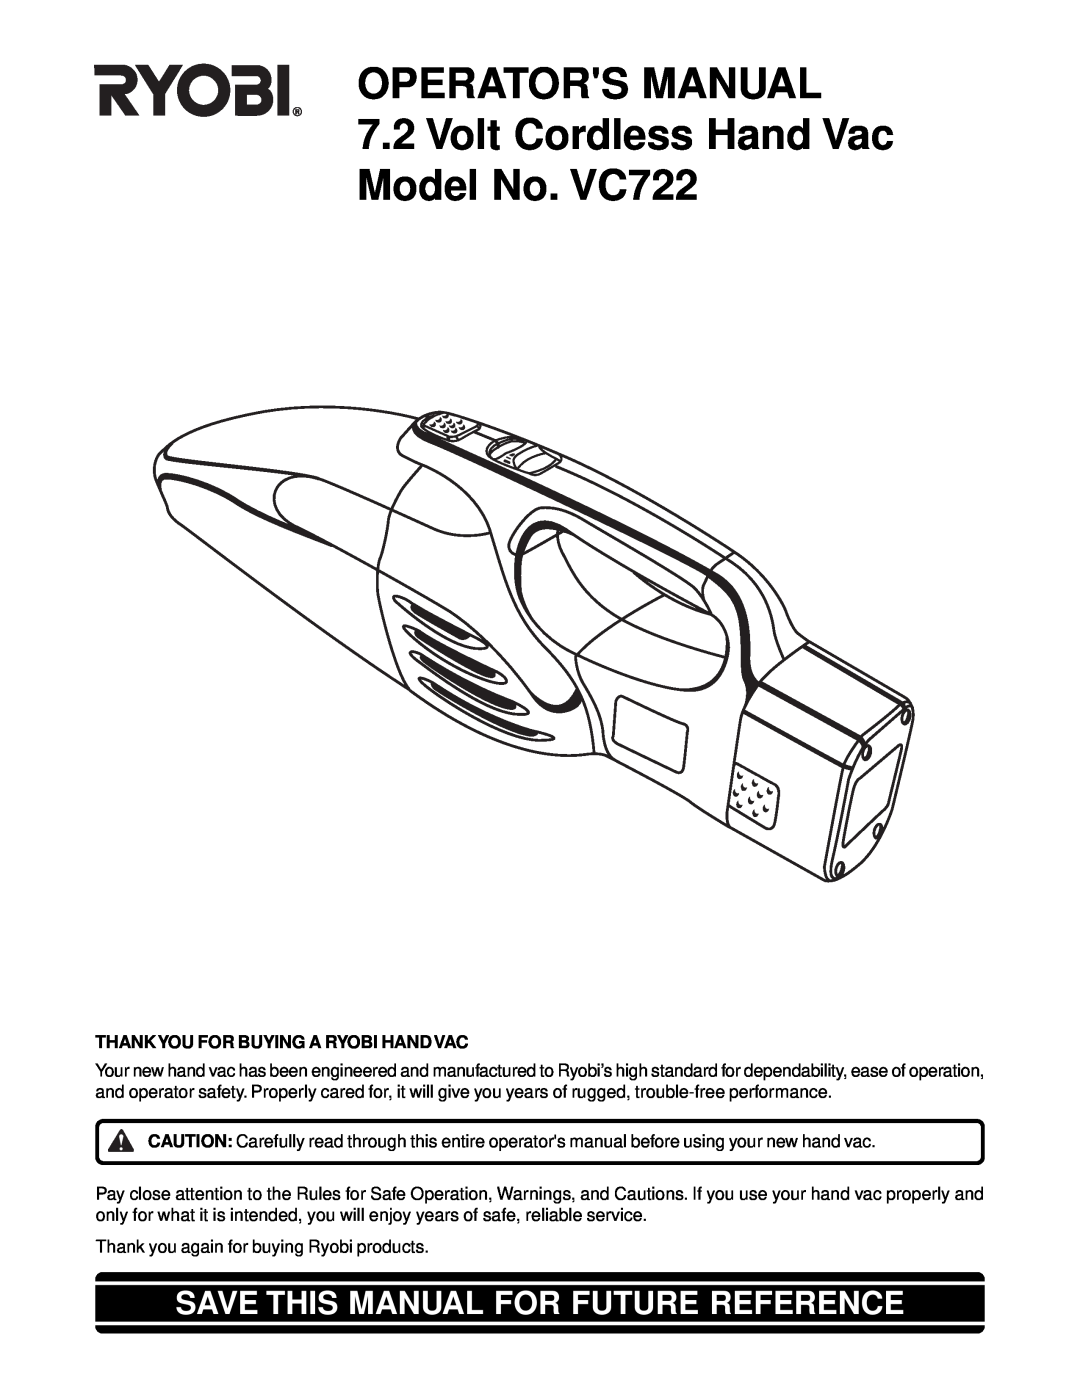 Ryobi manual Operators Manual, 7.2Volt Cordless Hand Vac Model No. VC722, Save This Manual For Future Reference 